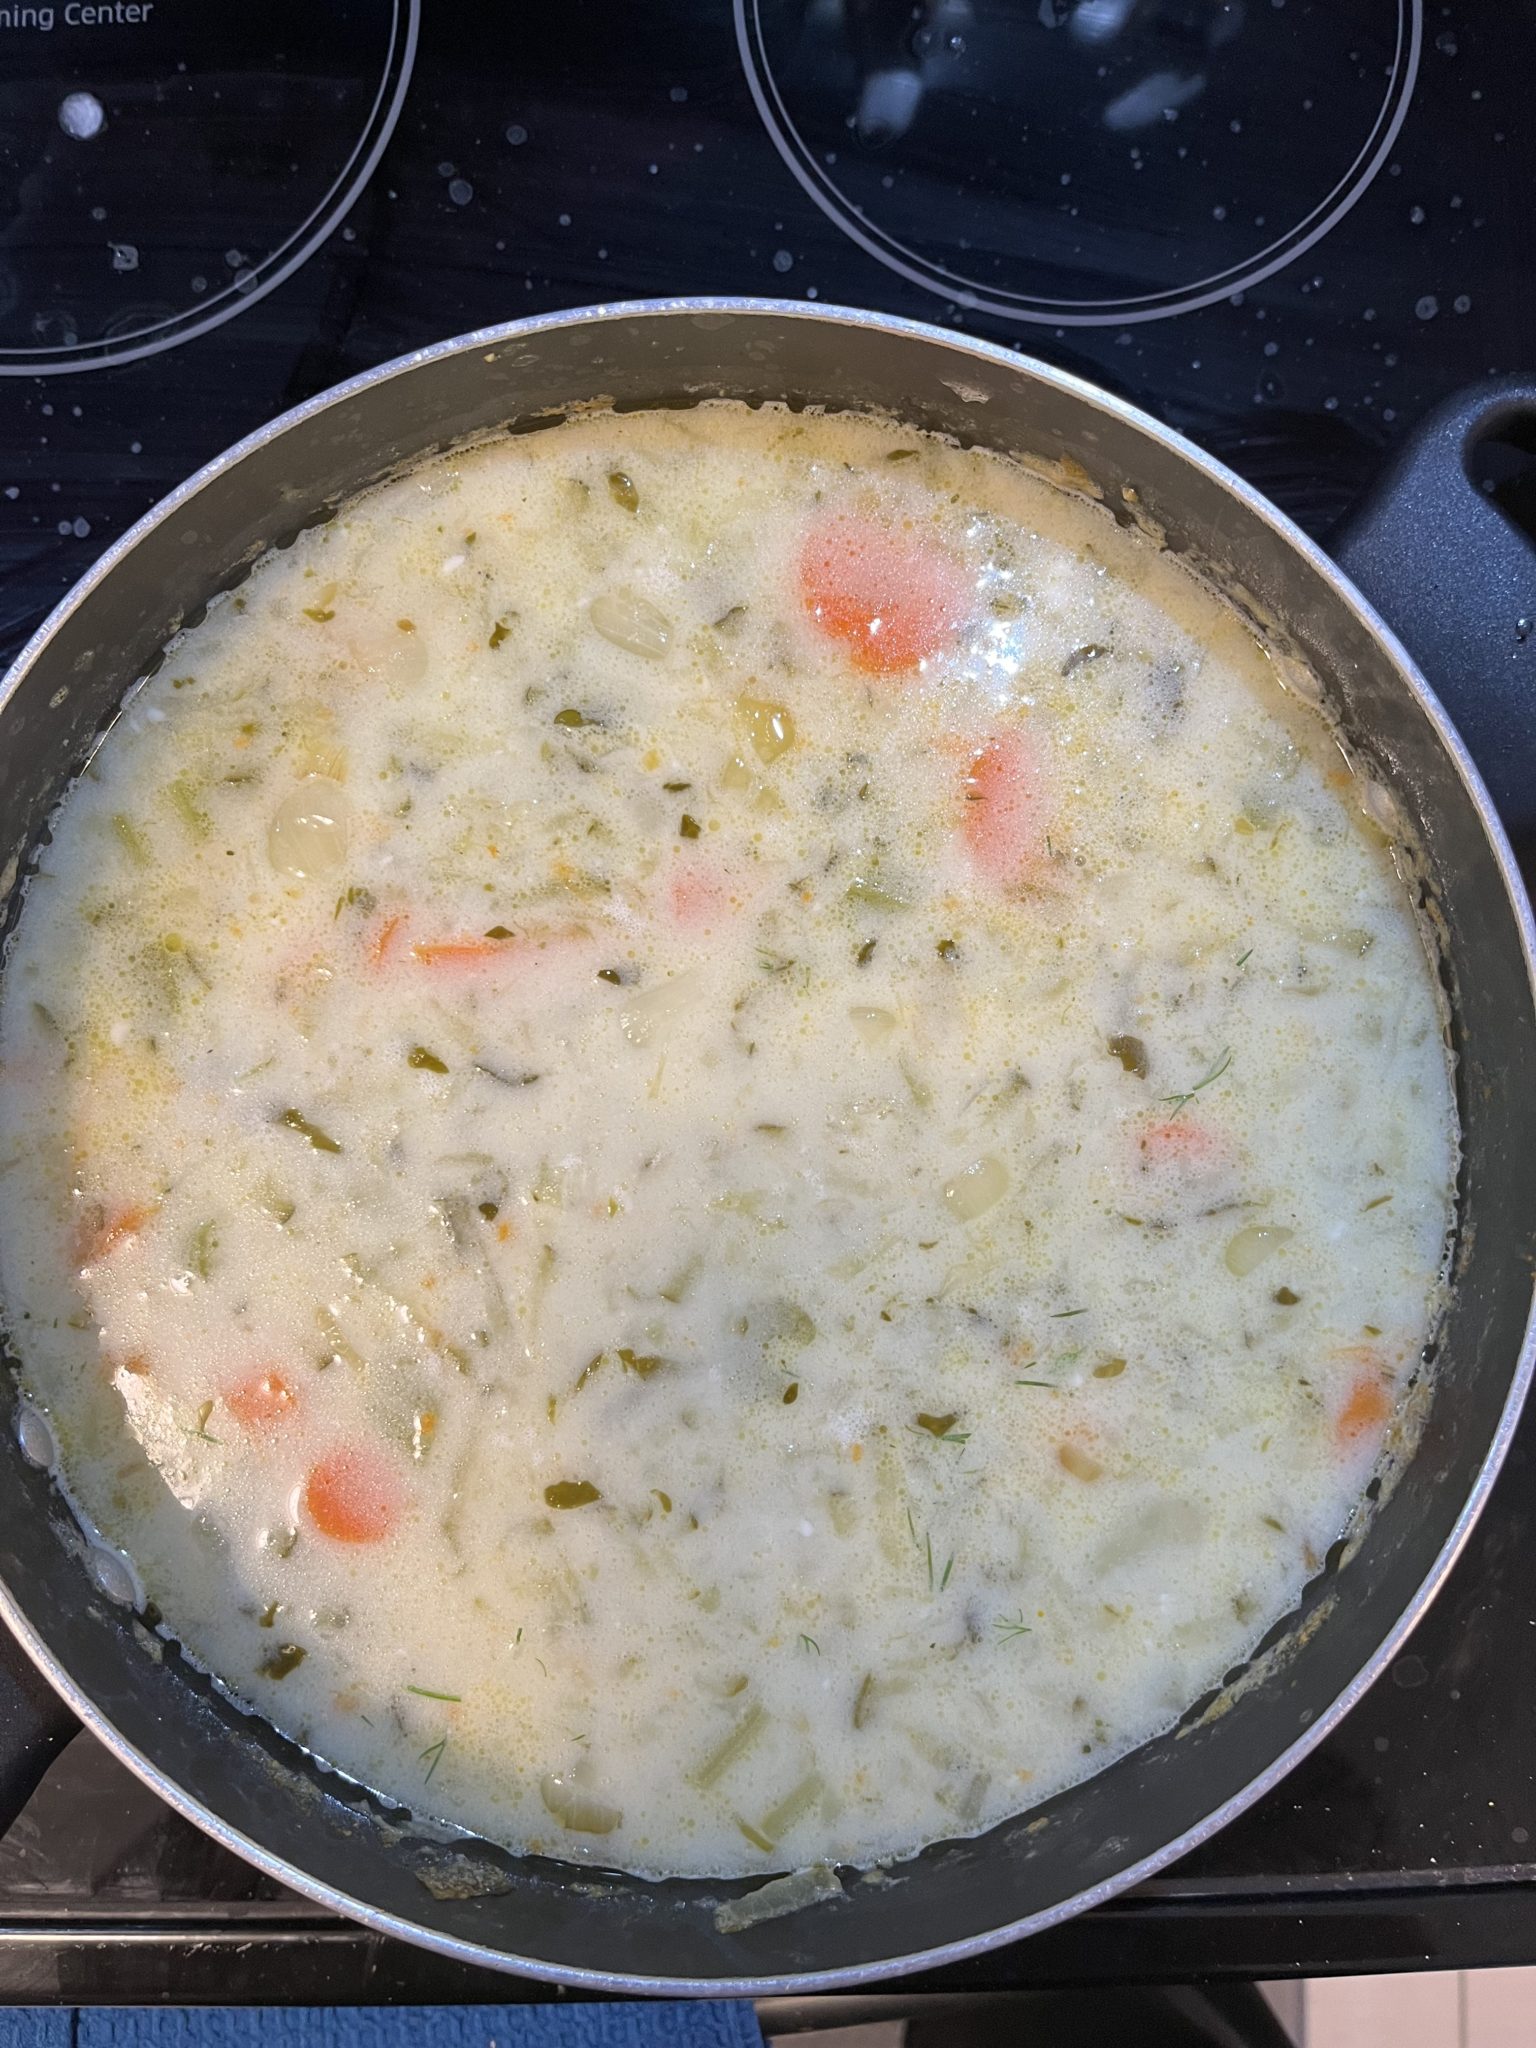 Polish Dill Pickle Soup – Zupa ogórkowa - Mama's recipe